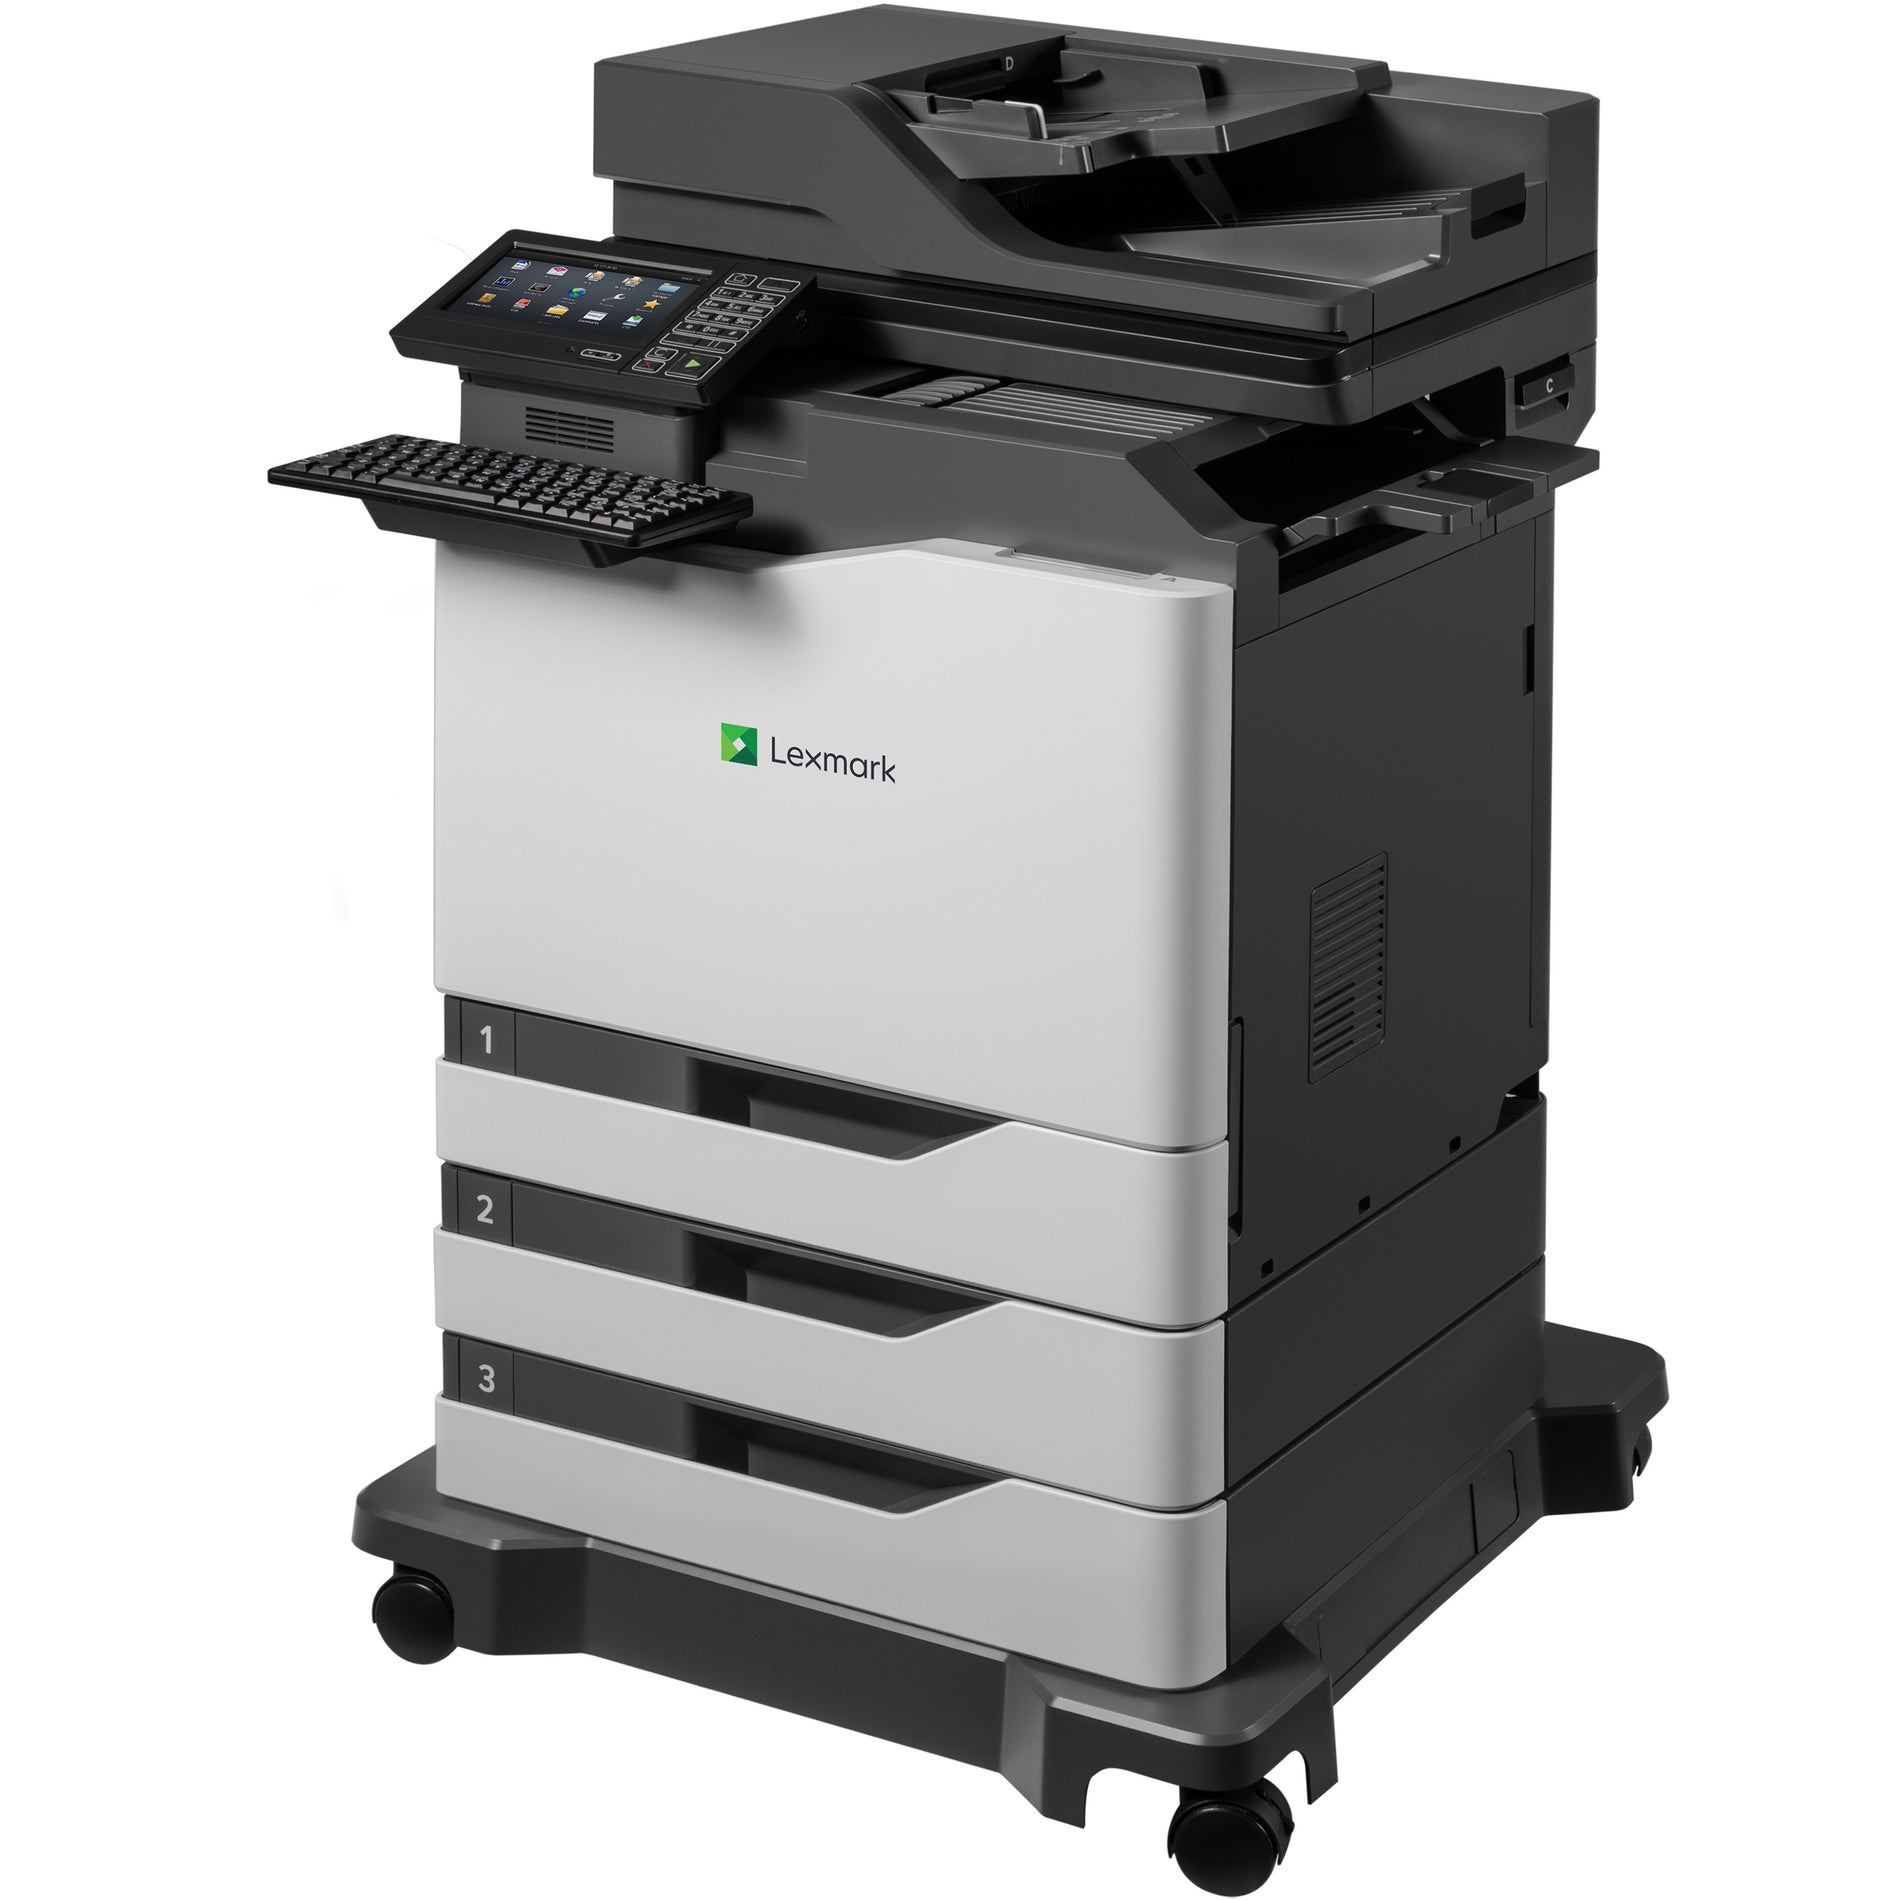 Lexmark 42KT112 CX820dtfe Colour Laser Multifunction Printer, Government Compliant